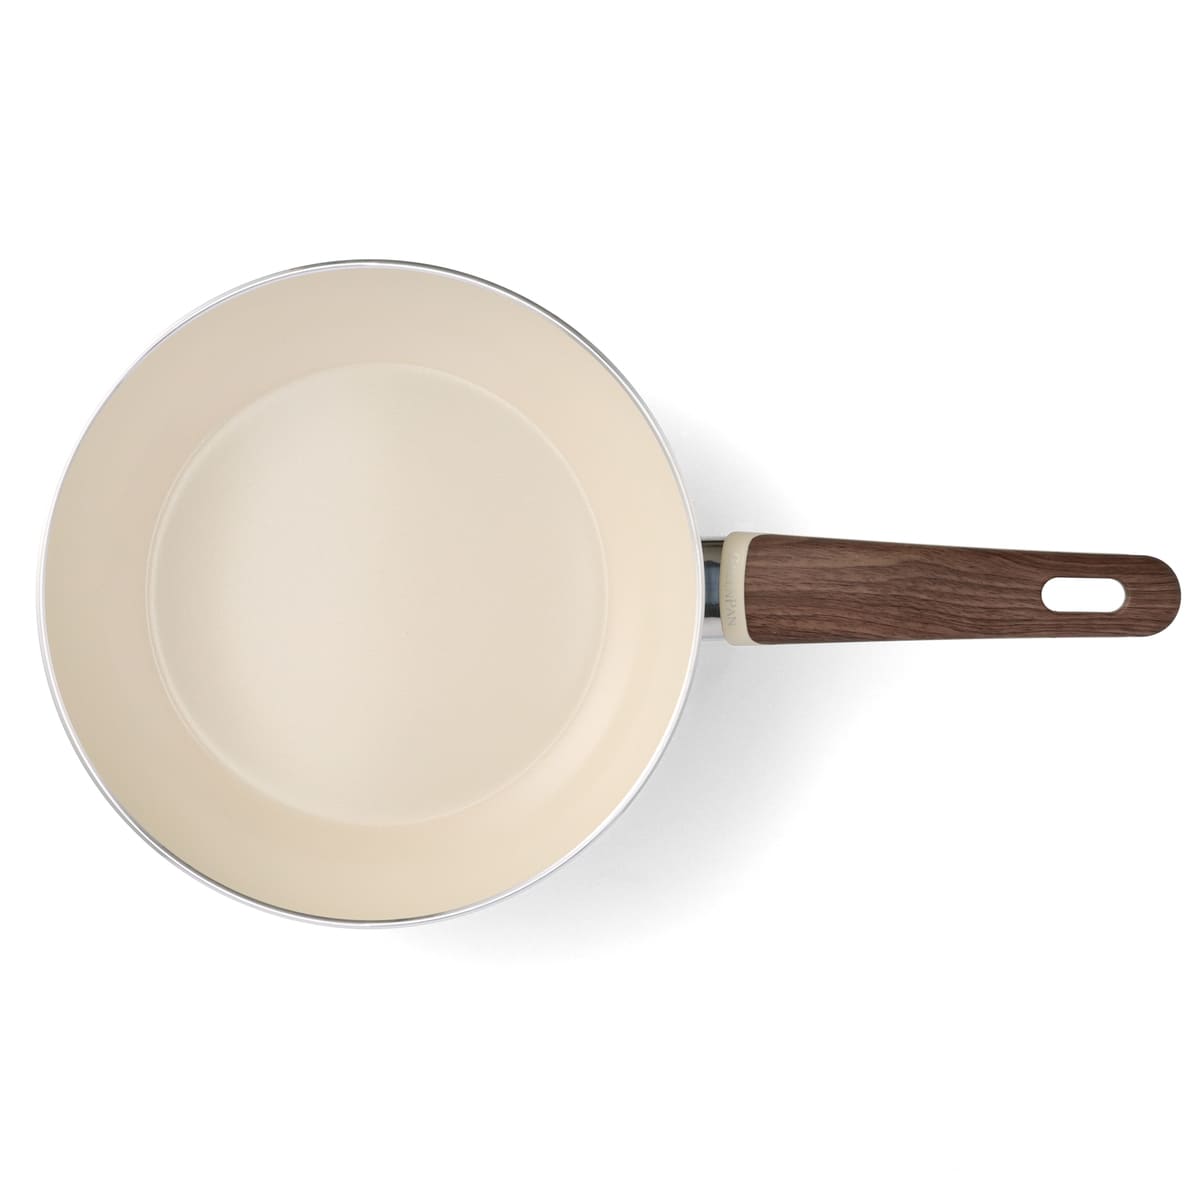 Wood-Be<br> frying pan, cream white - 20cm